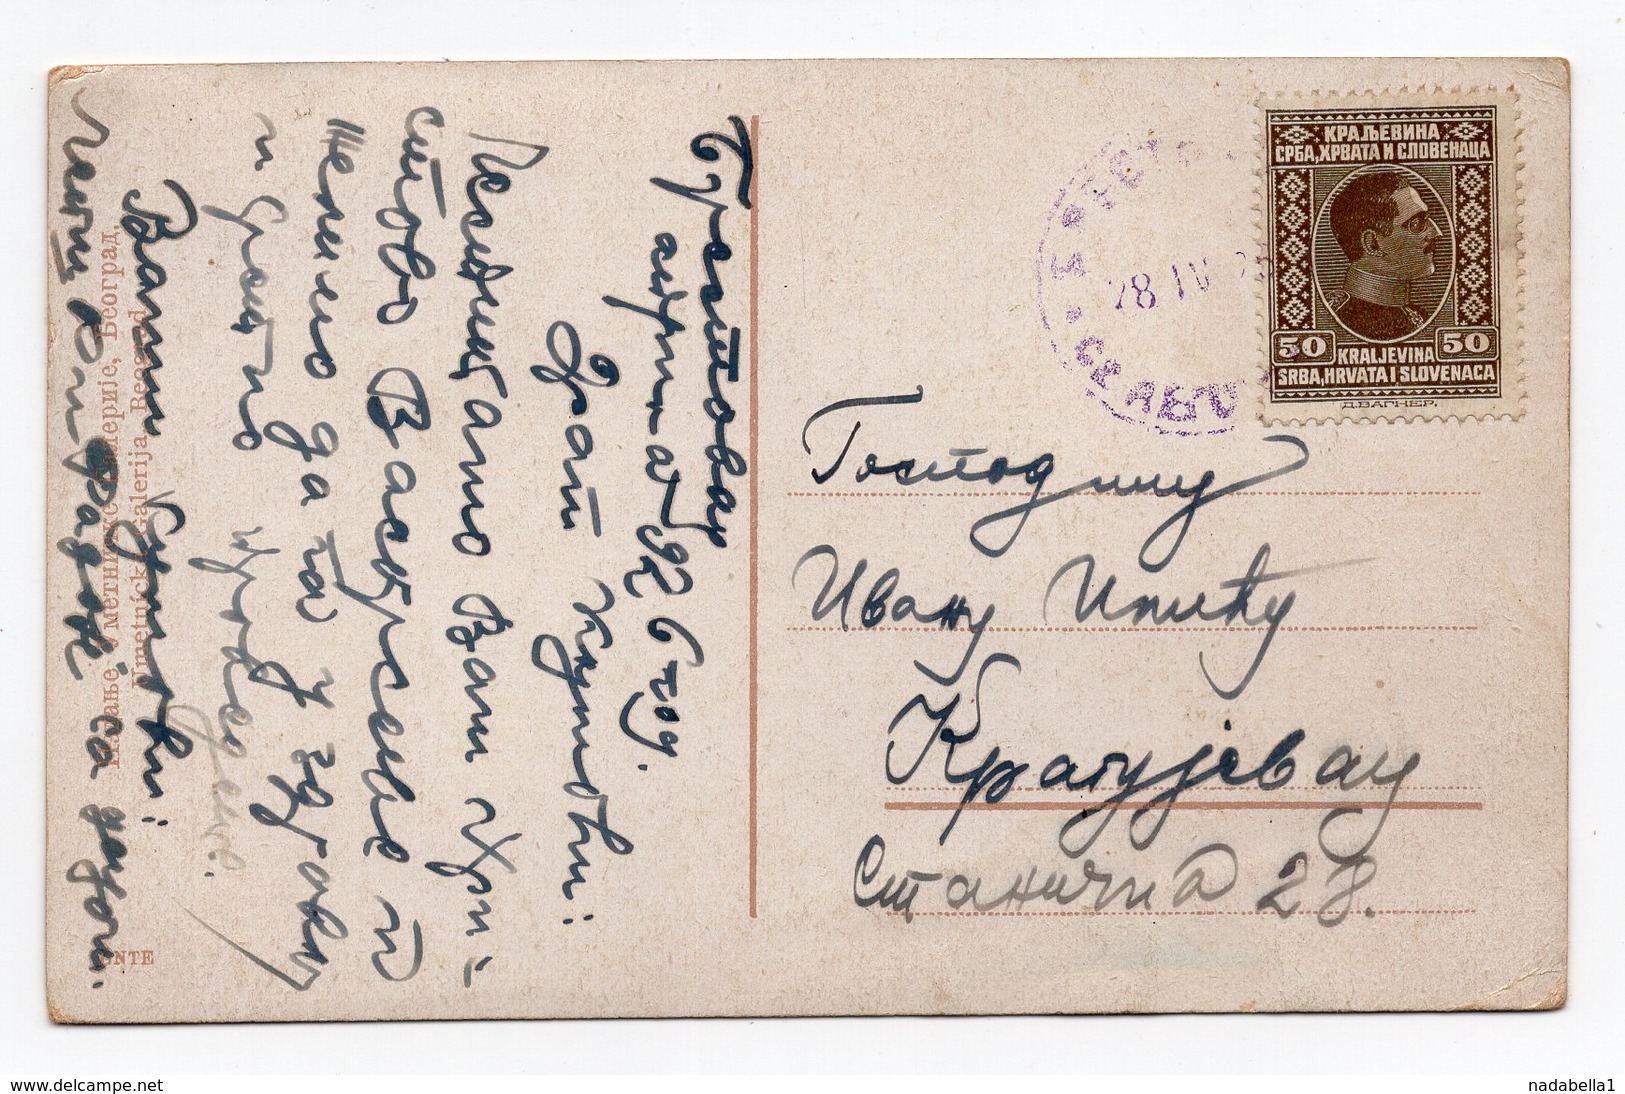 1926 KINGDOM OF SHS,SERBIA,BRESTOVAC POSTMARK,EASTER CARD,USED - Yugoslavia